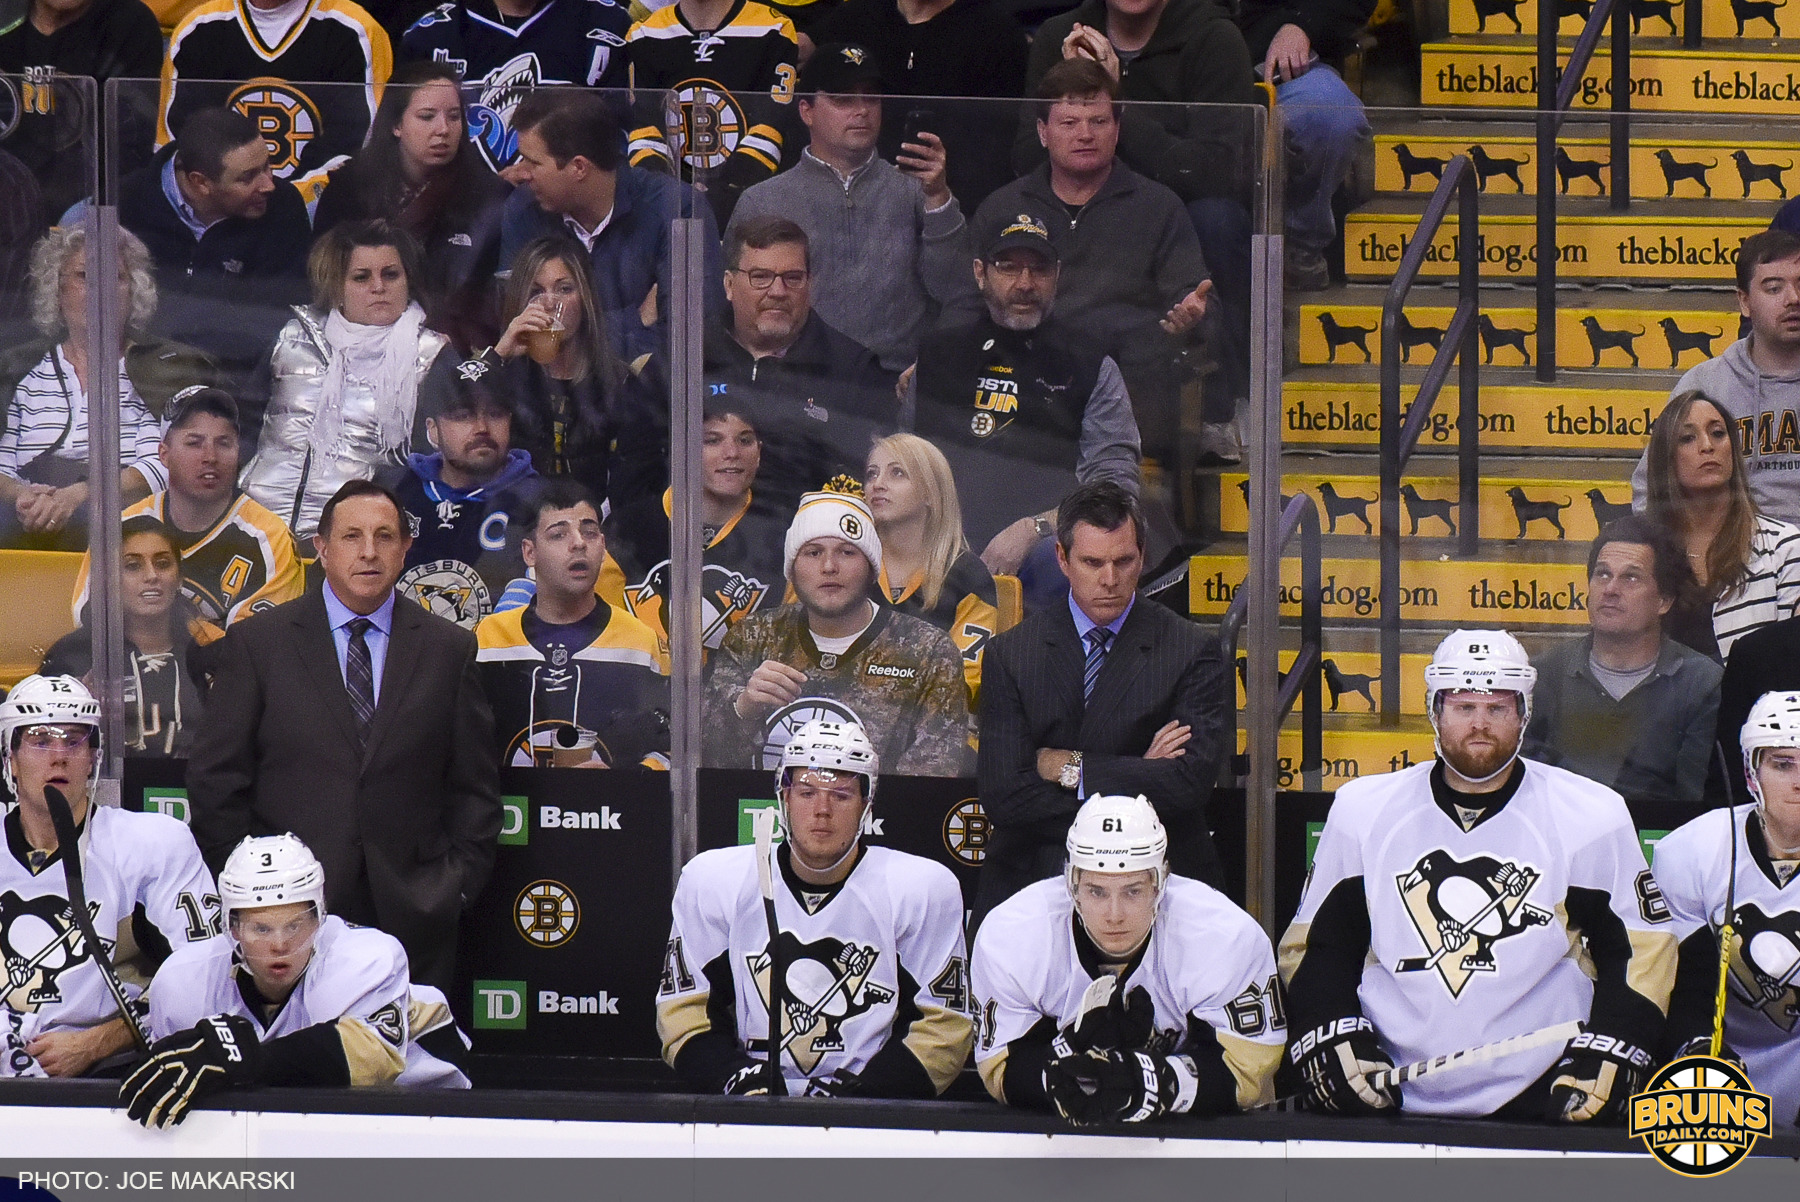 Bruins-Penguins, hockey head coaches